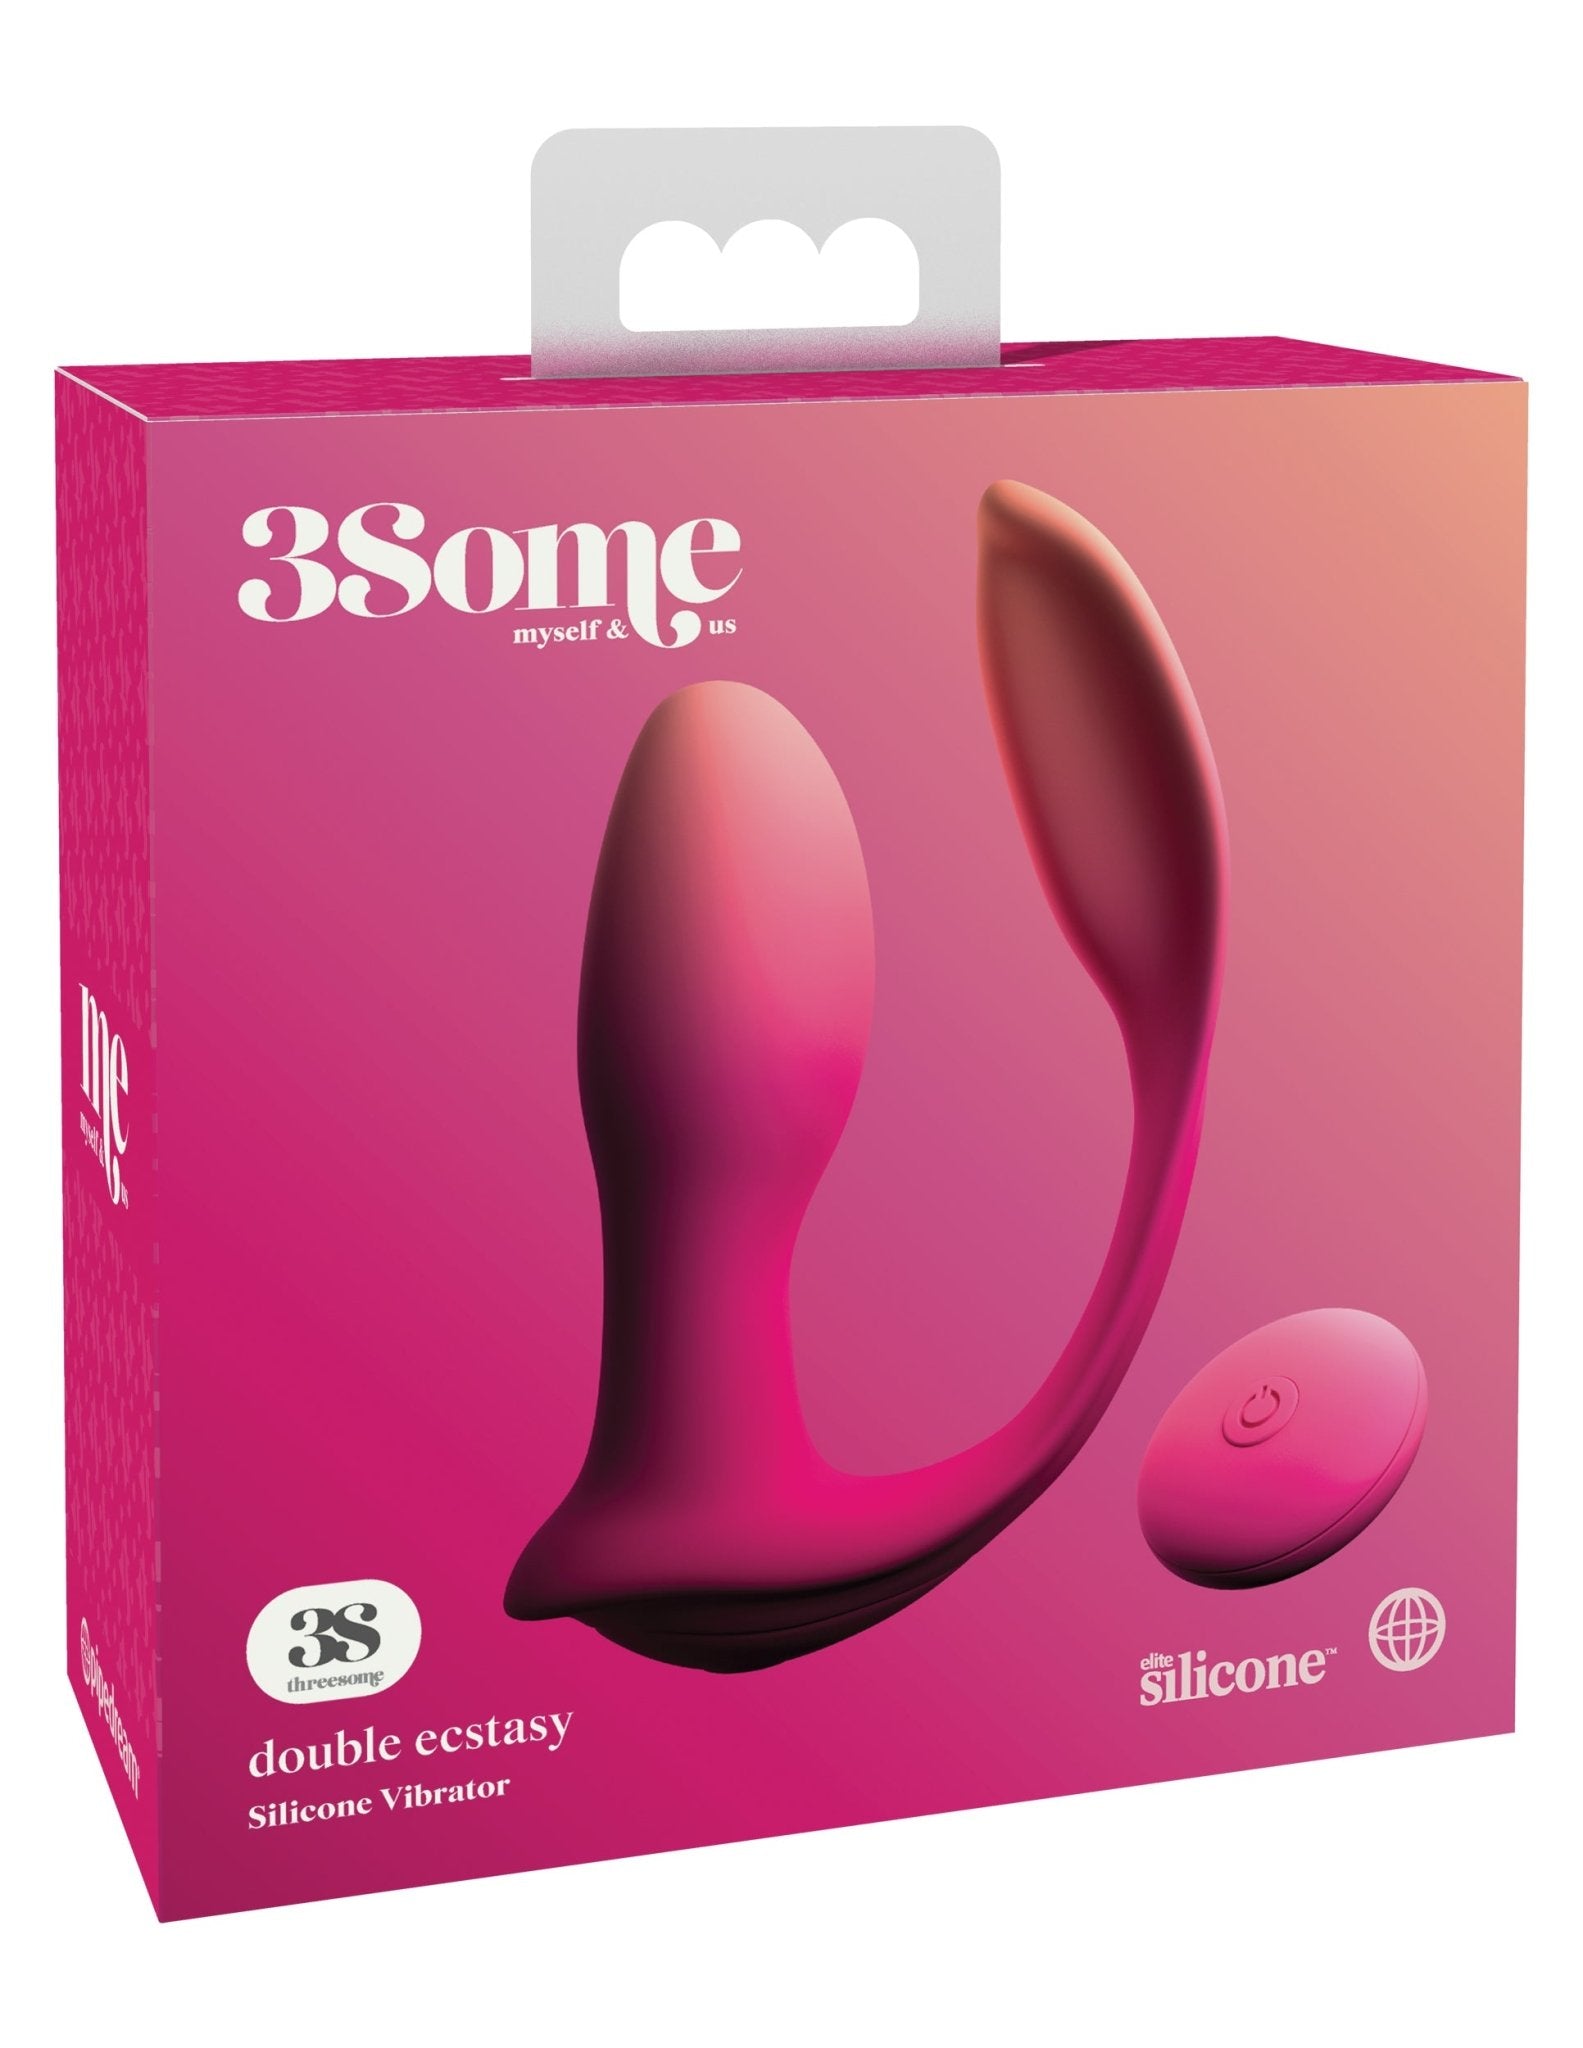 3some Double Ecstasy Silicone Vibrator - Pipedream